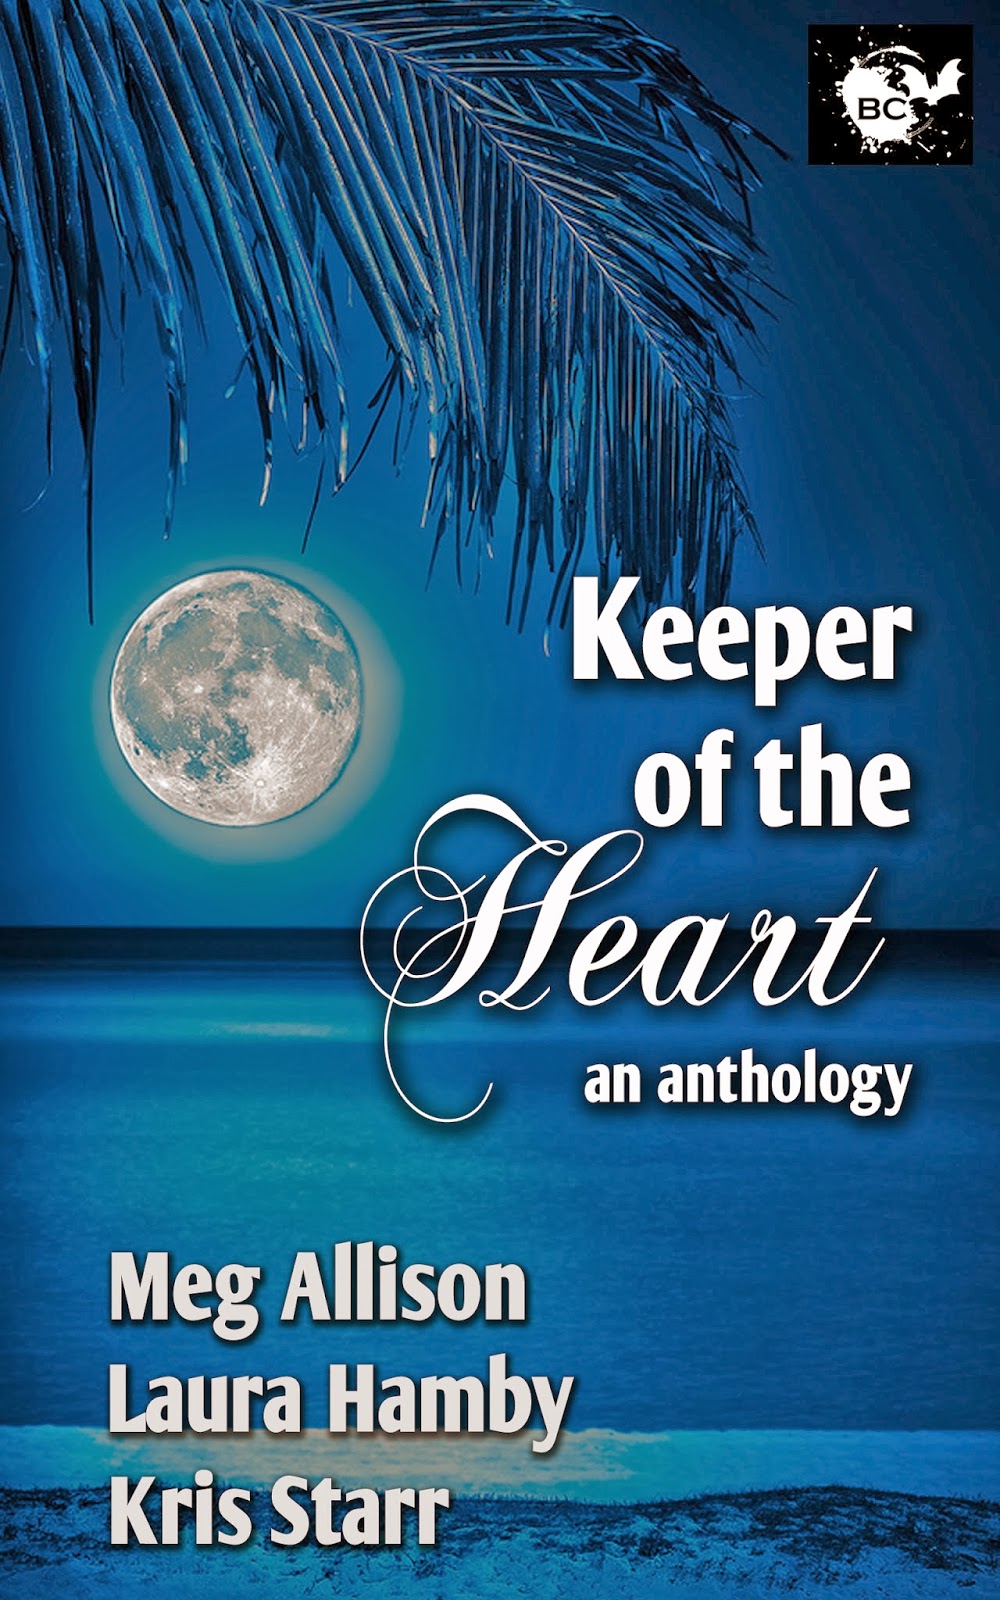 http://www.amazon.com/Keeper-Heart-Anthology-Meg-Allison-ebook/dp/B00I13WJKC/ref=sr_1_6?s=digital-text&ie=UTF8&qid=1393002132&sr=1-6&keywords=keeper+of+the+heart